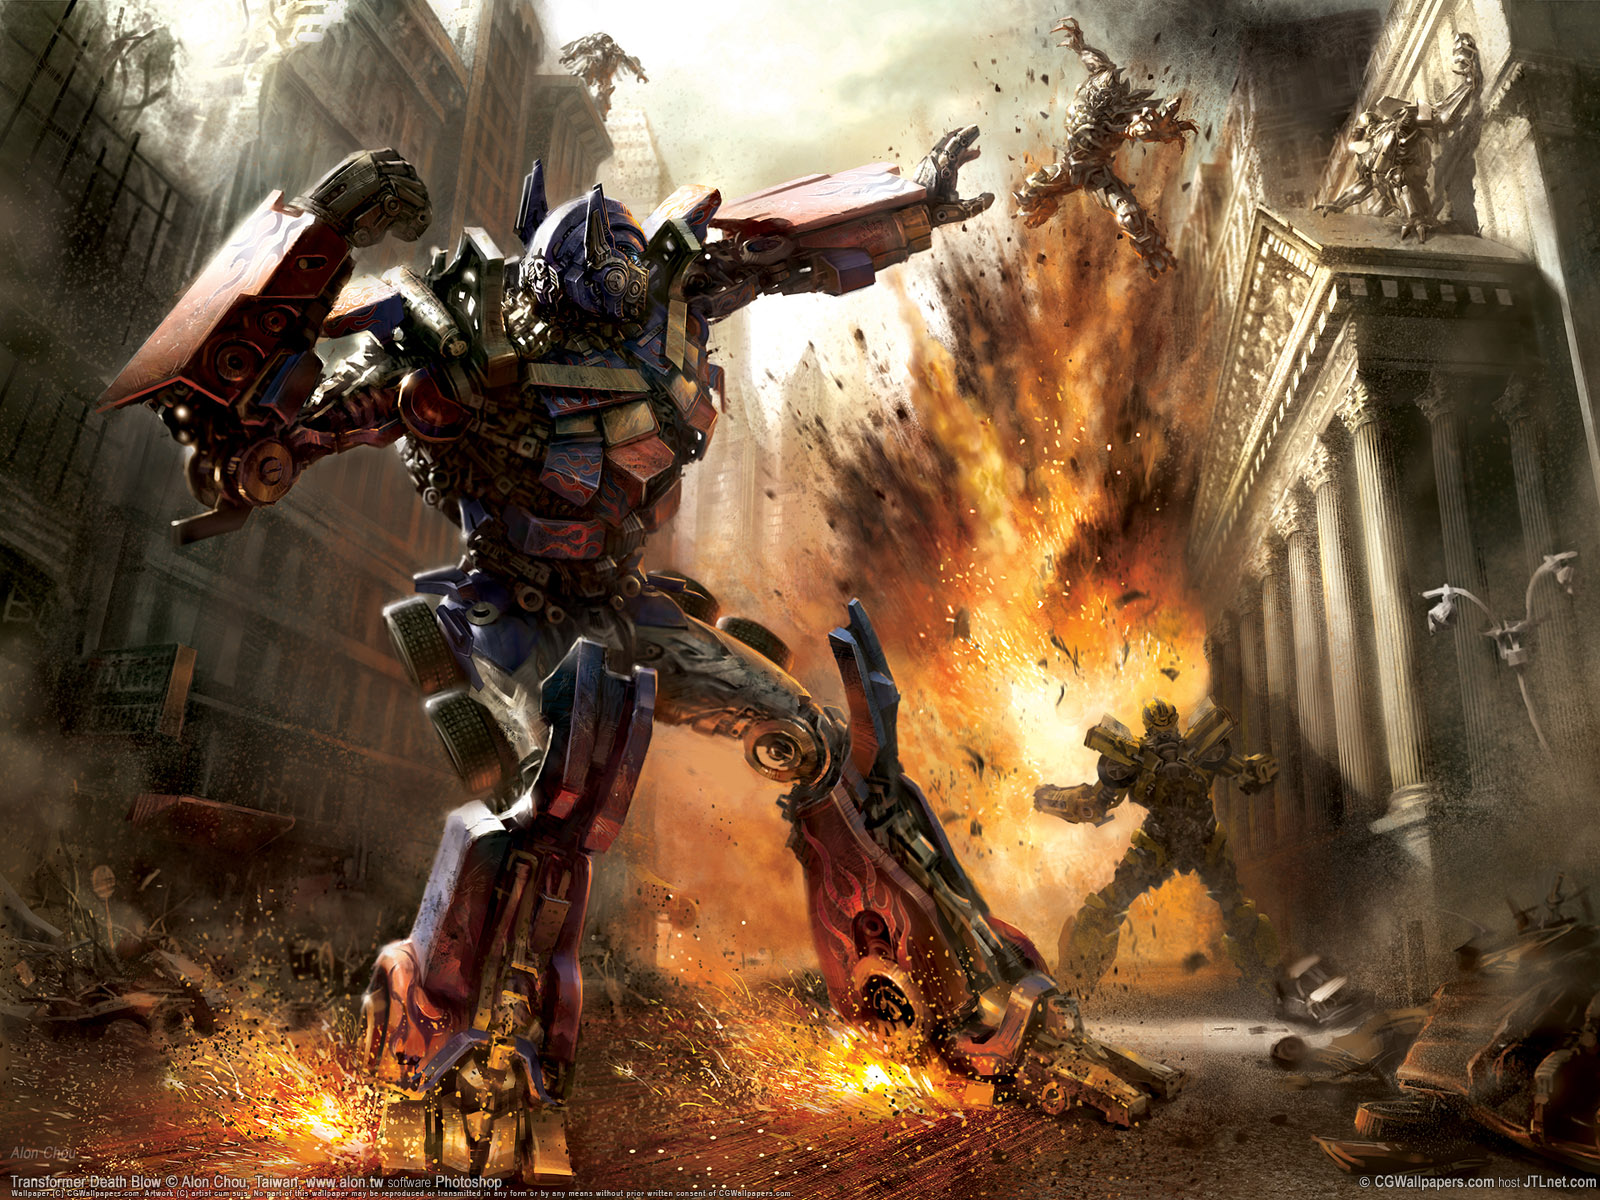 Alayx WAllpaper: 16 Powerful Transformers